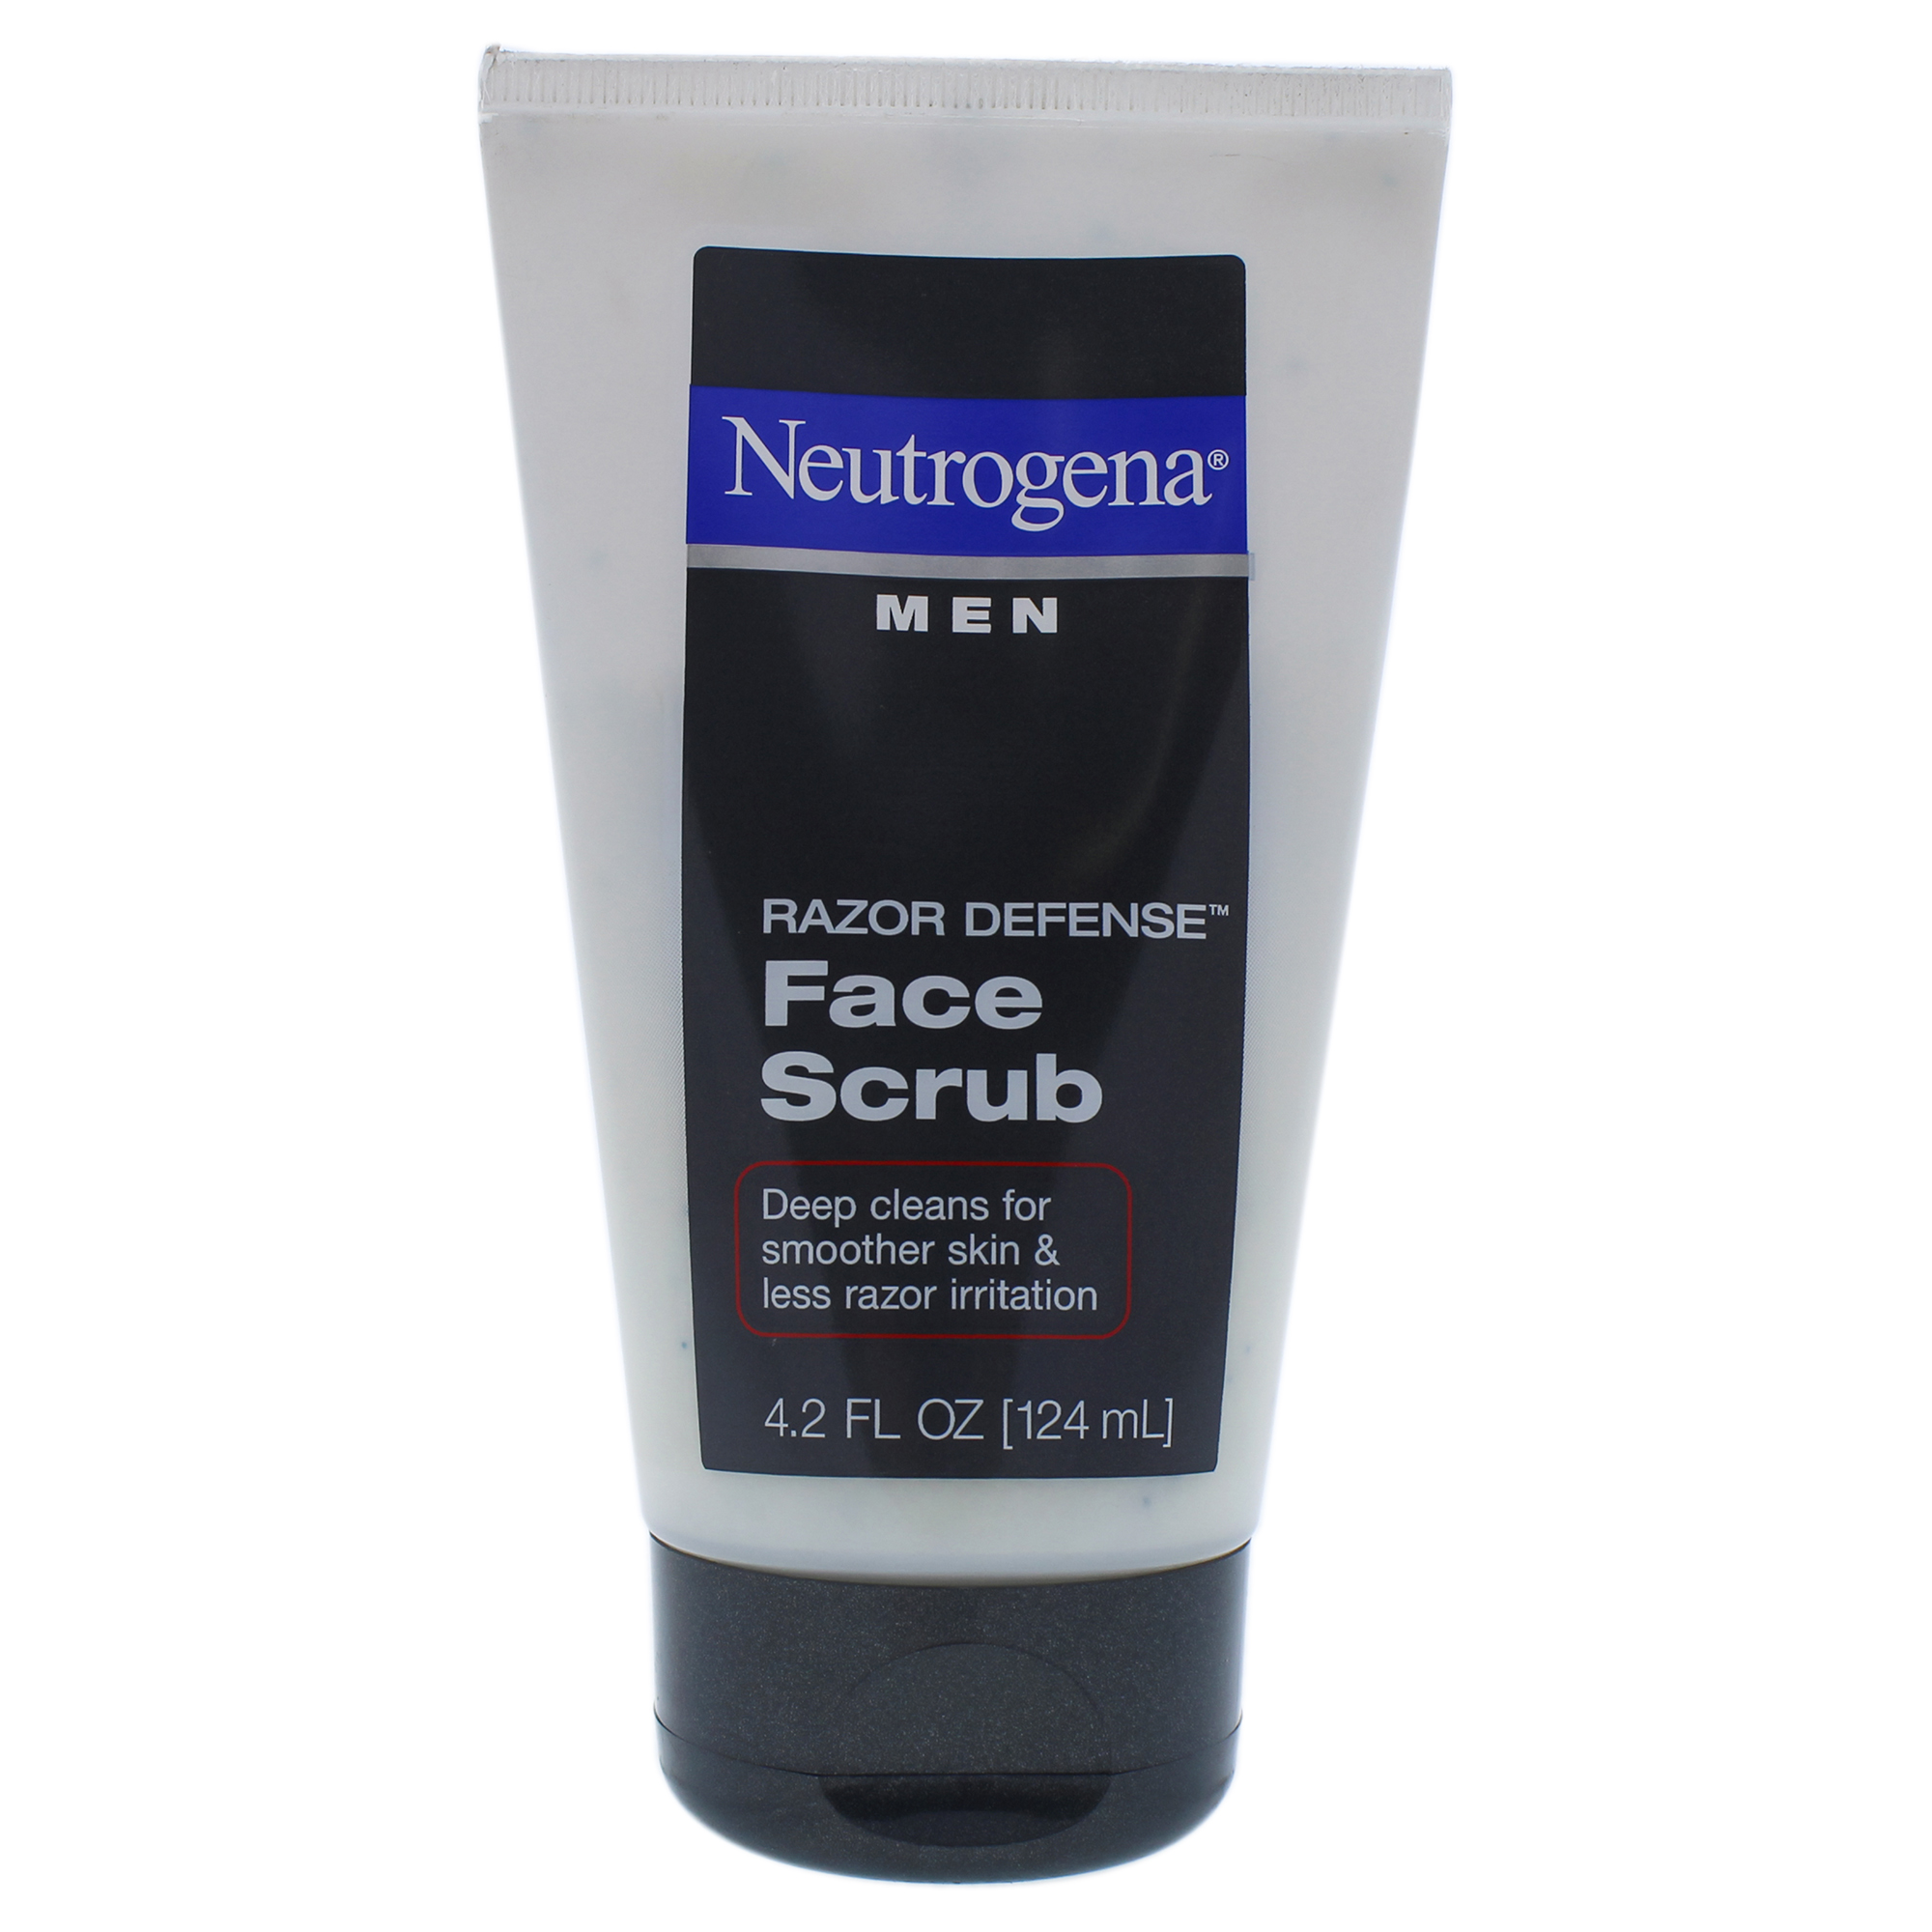 Neutrogena Men Razor Defense Face Scrub , 4.2 oz Scrub - image 1 of 2